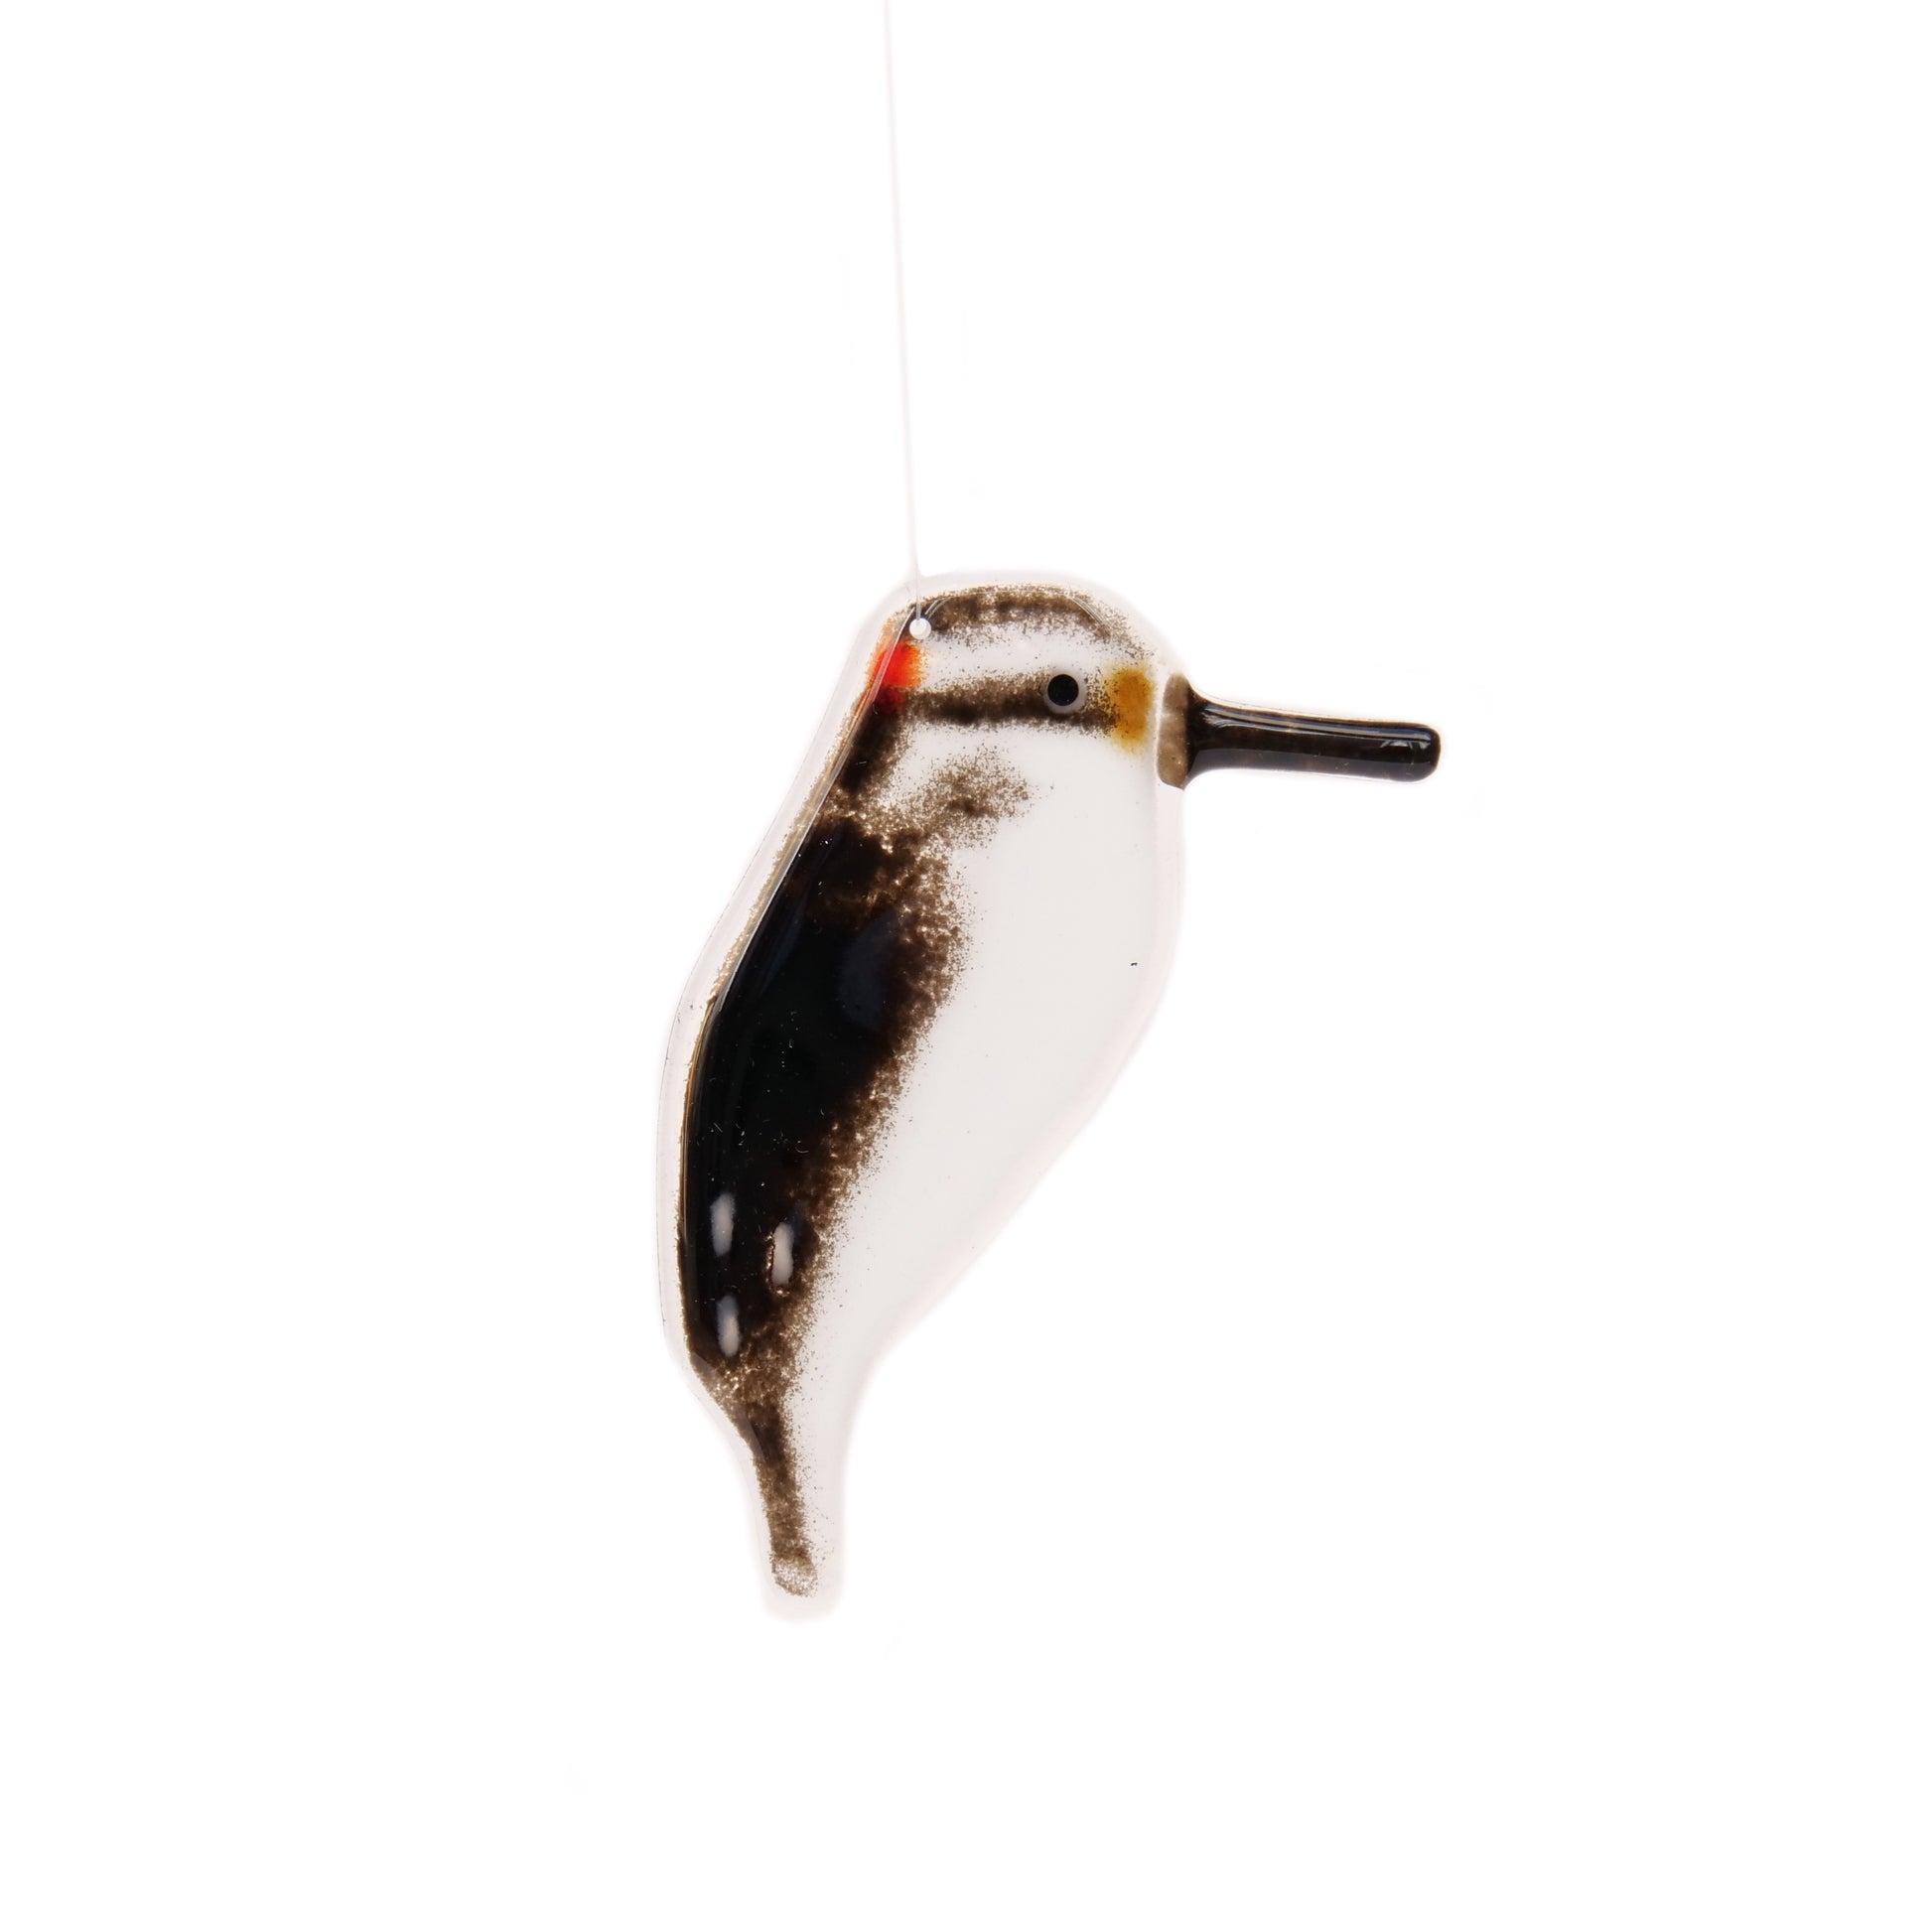 Glass woodpecker ornament handmade in Canada.